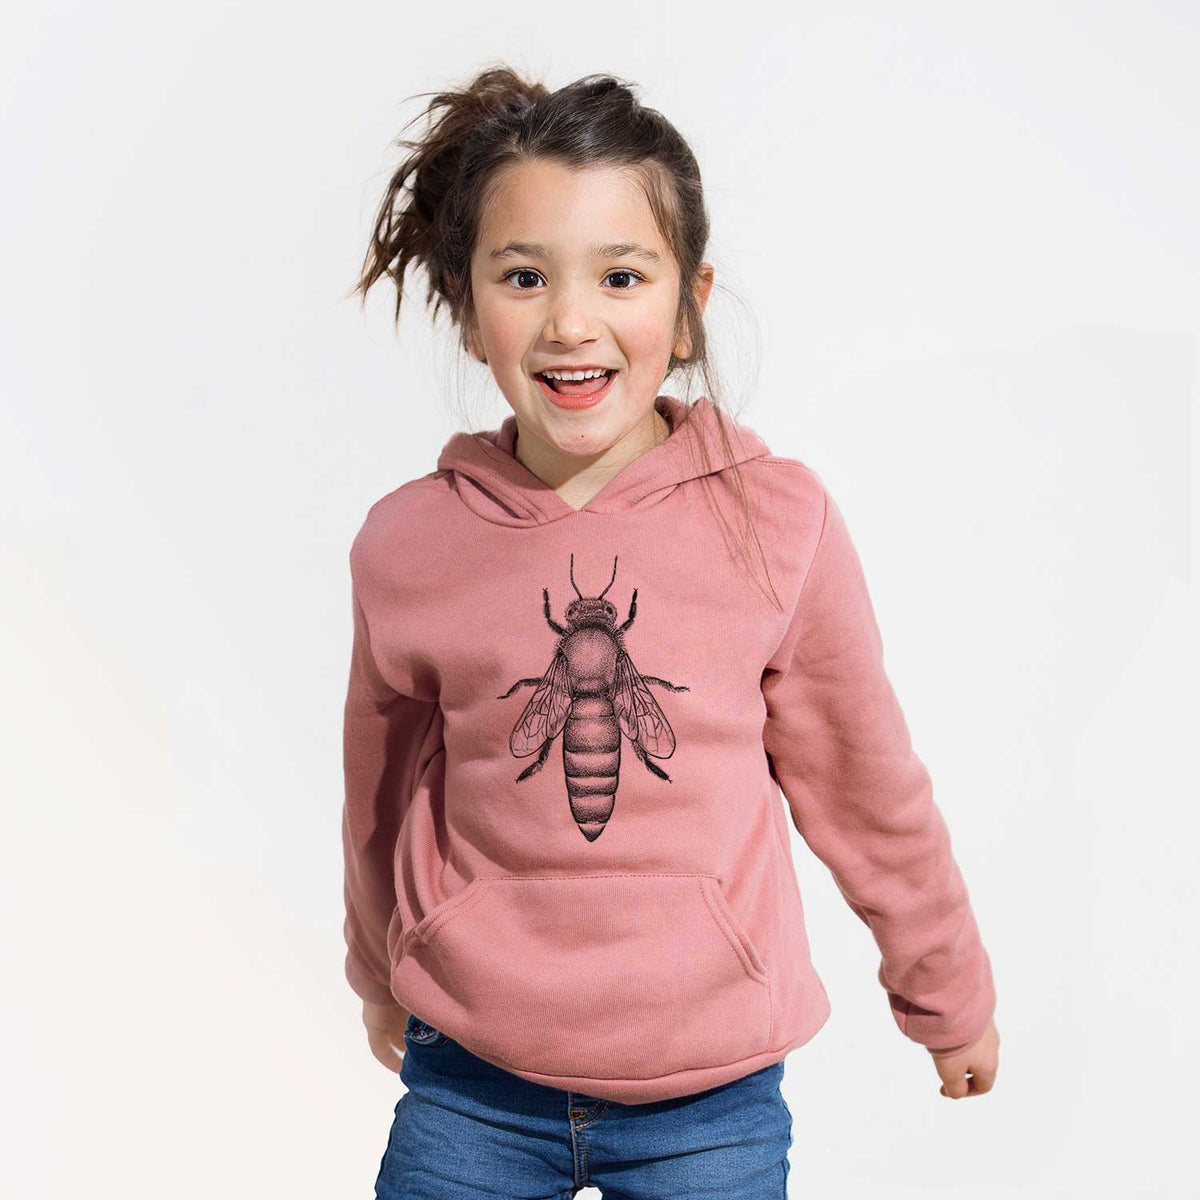 Queen Bee Apis Mellifera - Youth Hoodie Sweatshirt